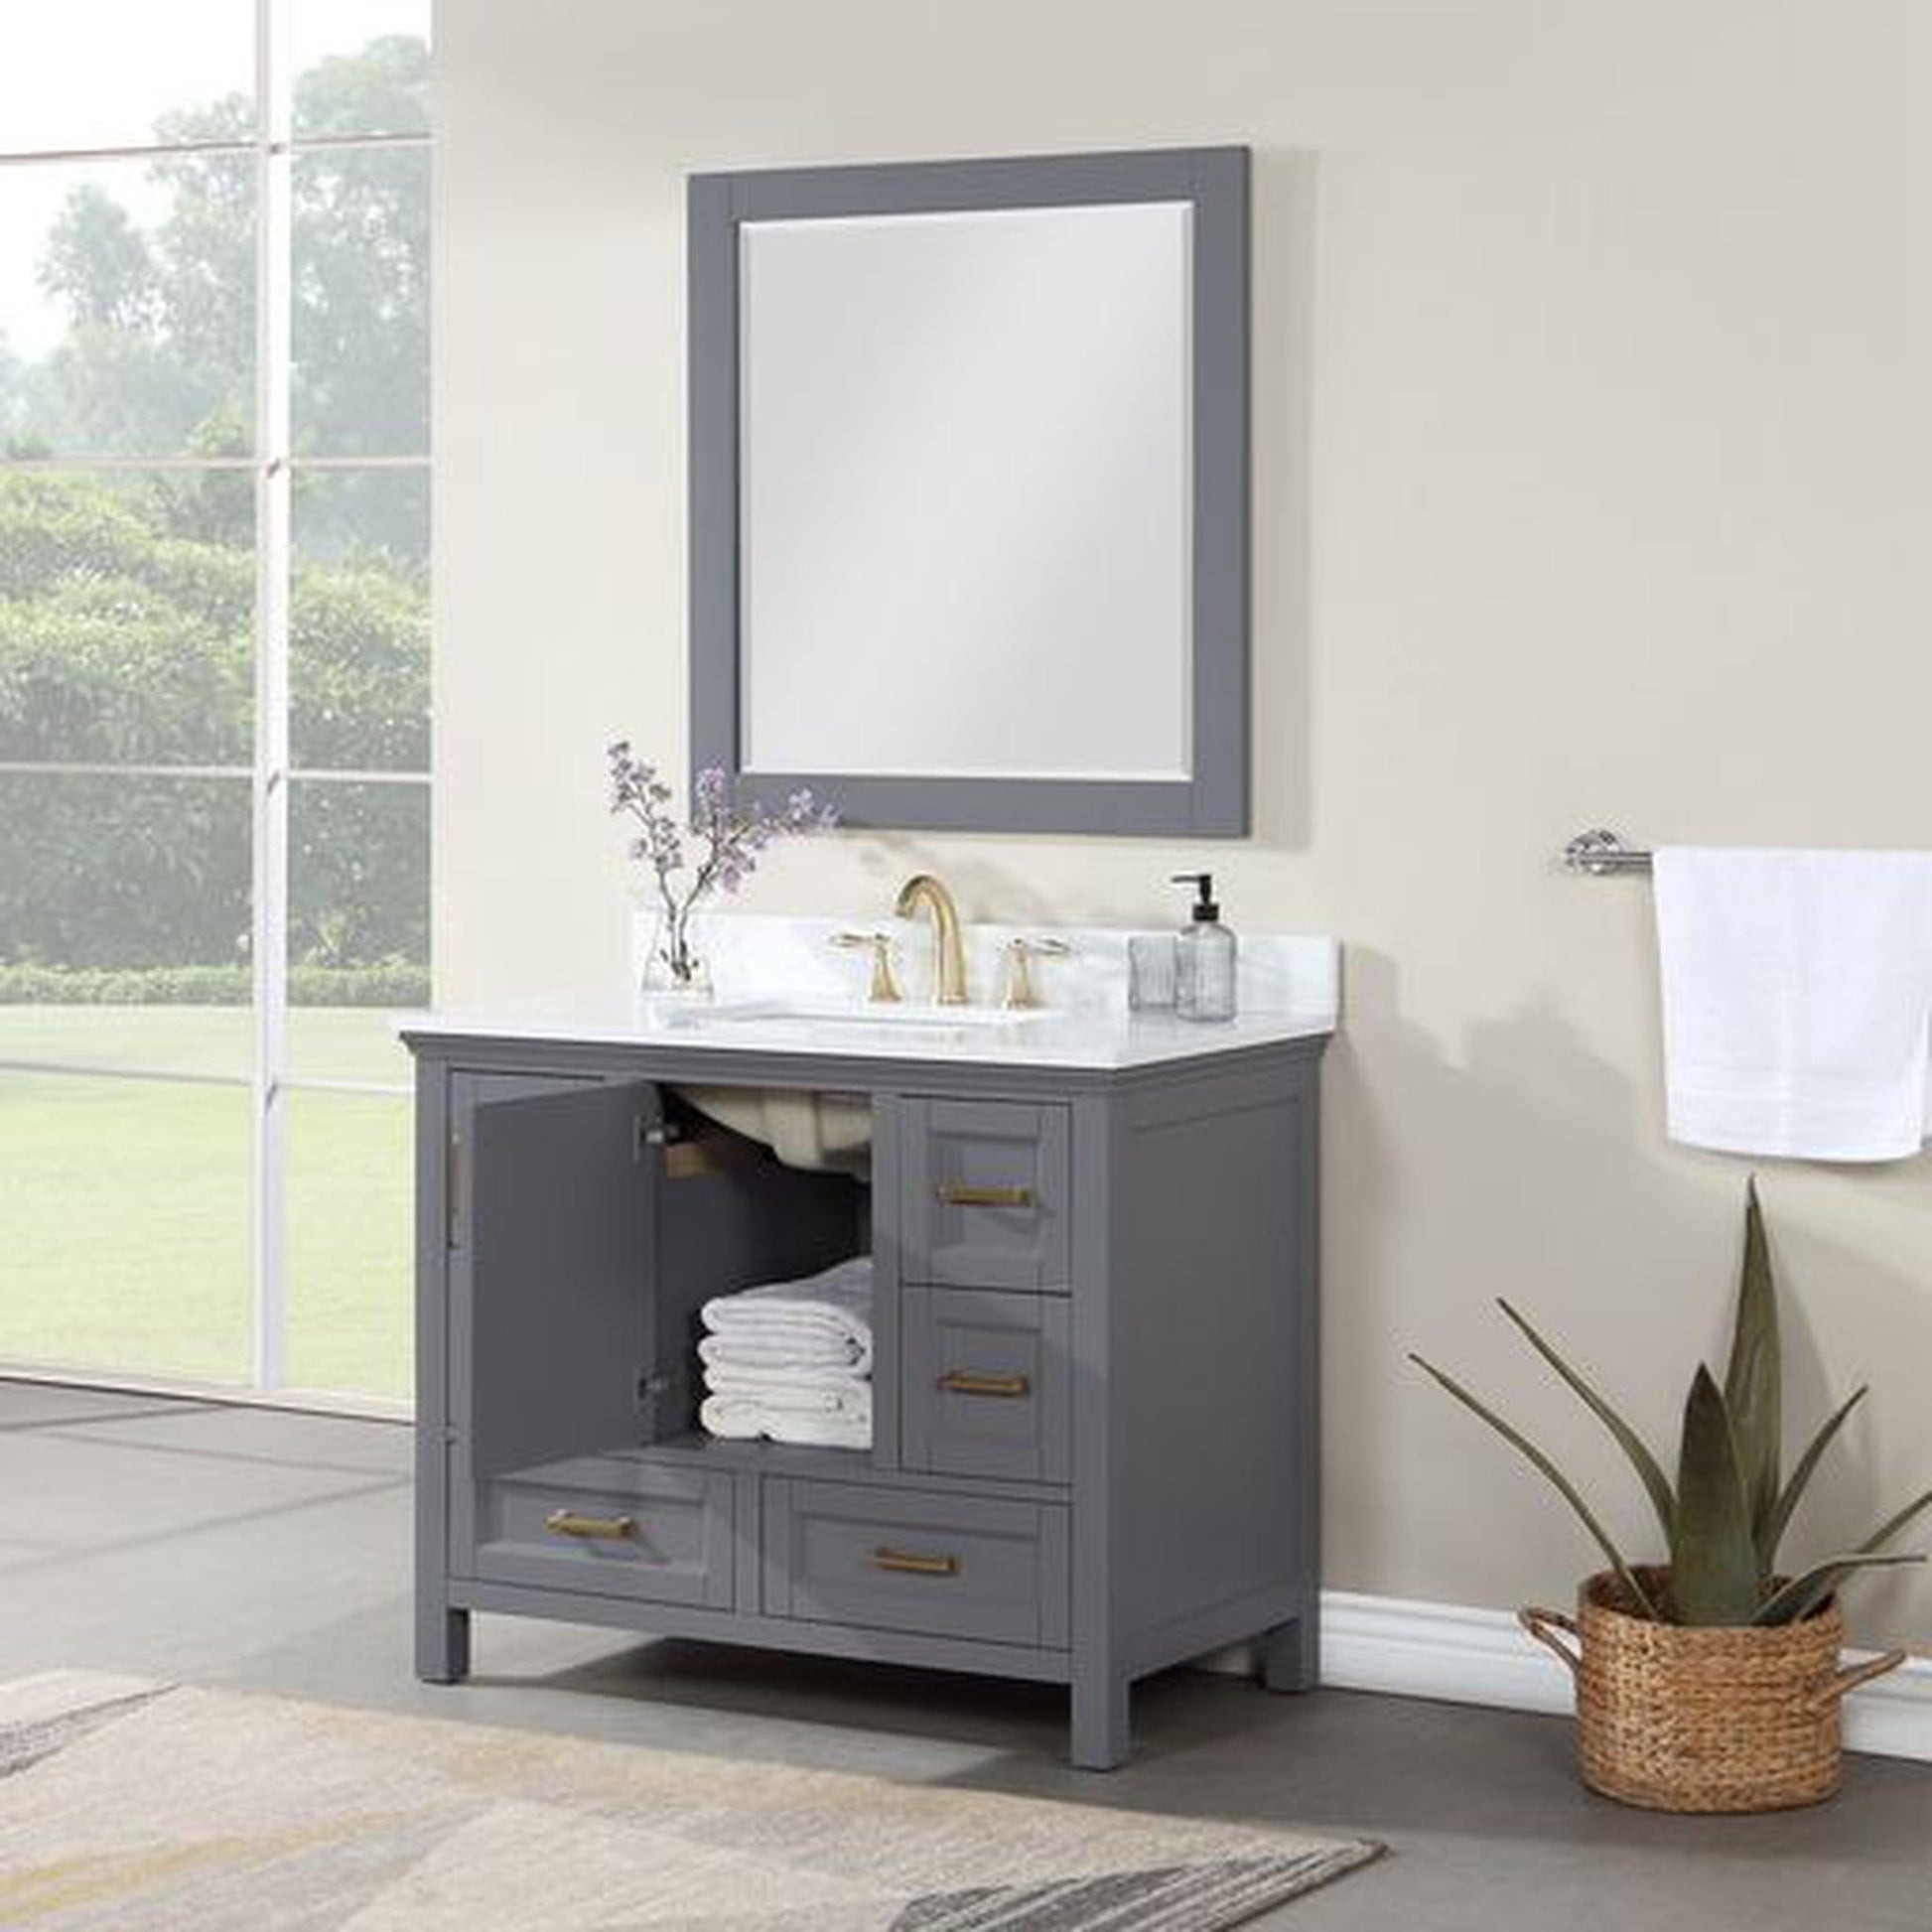 Altair Isla 42" Single Gray Freestanding Bathroom Vanity Set With Mirror, Aosta White Composite Stone Top, Rectangular Undermount Ceramic Sink, and Overflow